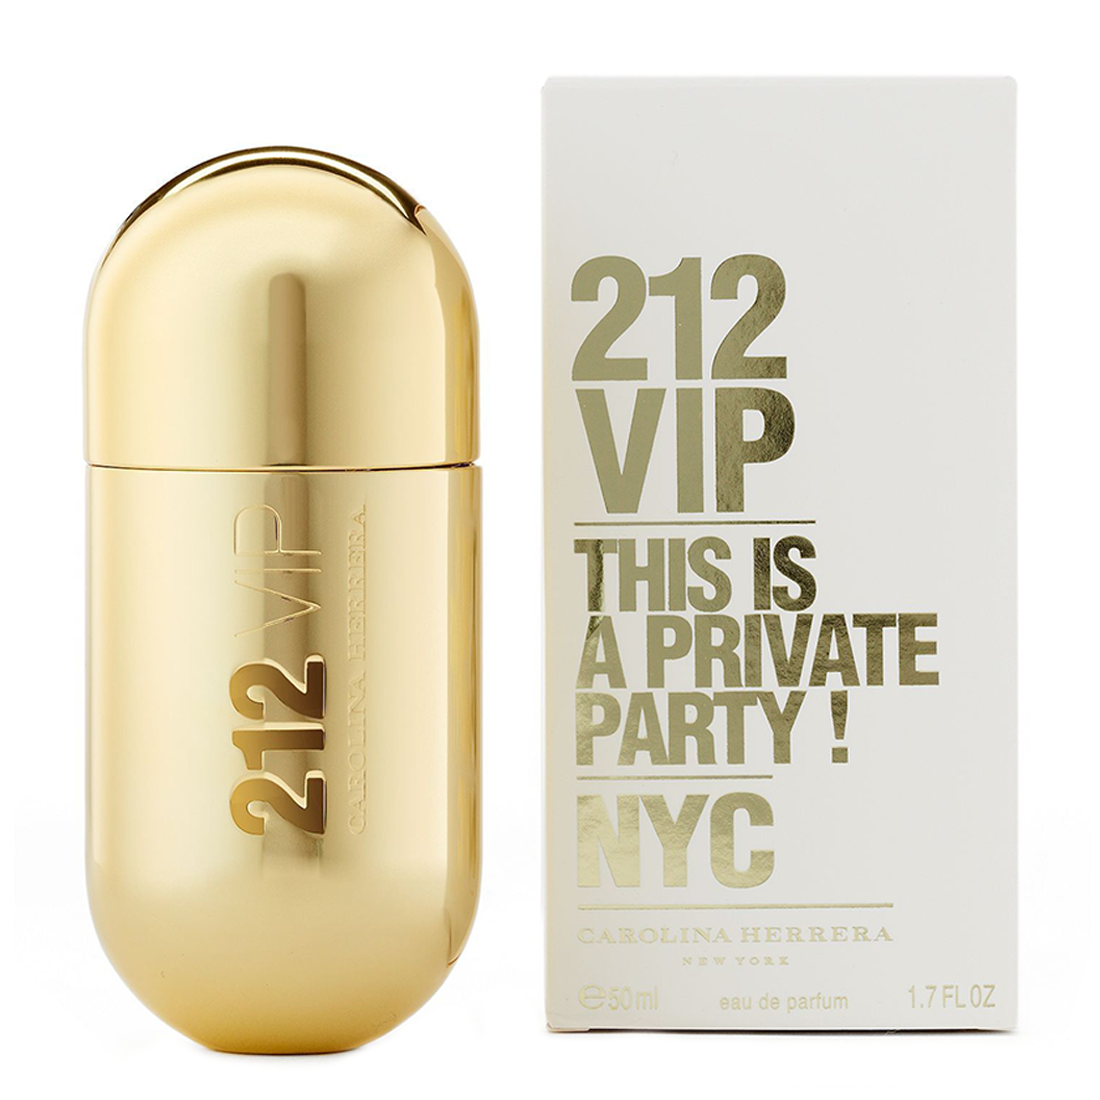 212 VIP by Carolina Herrera Eau de Parfum Spray 4.2 oz (women)